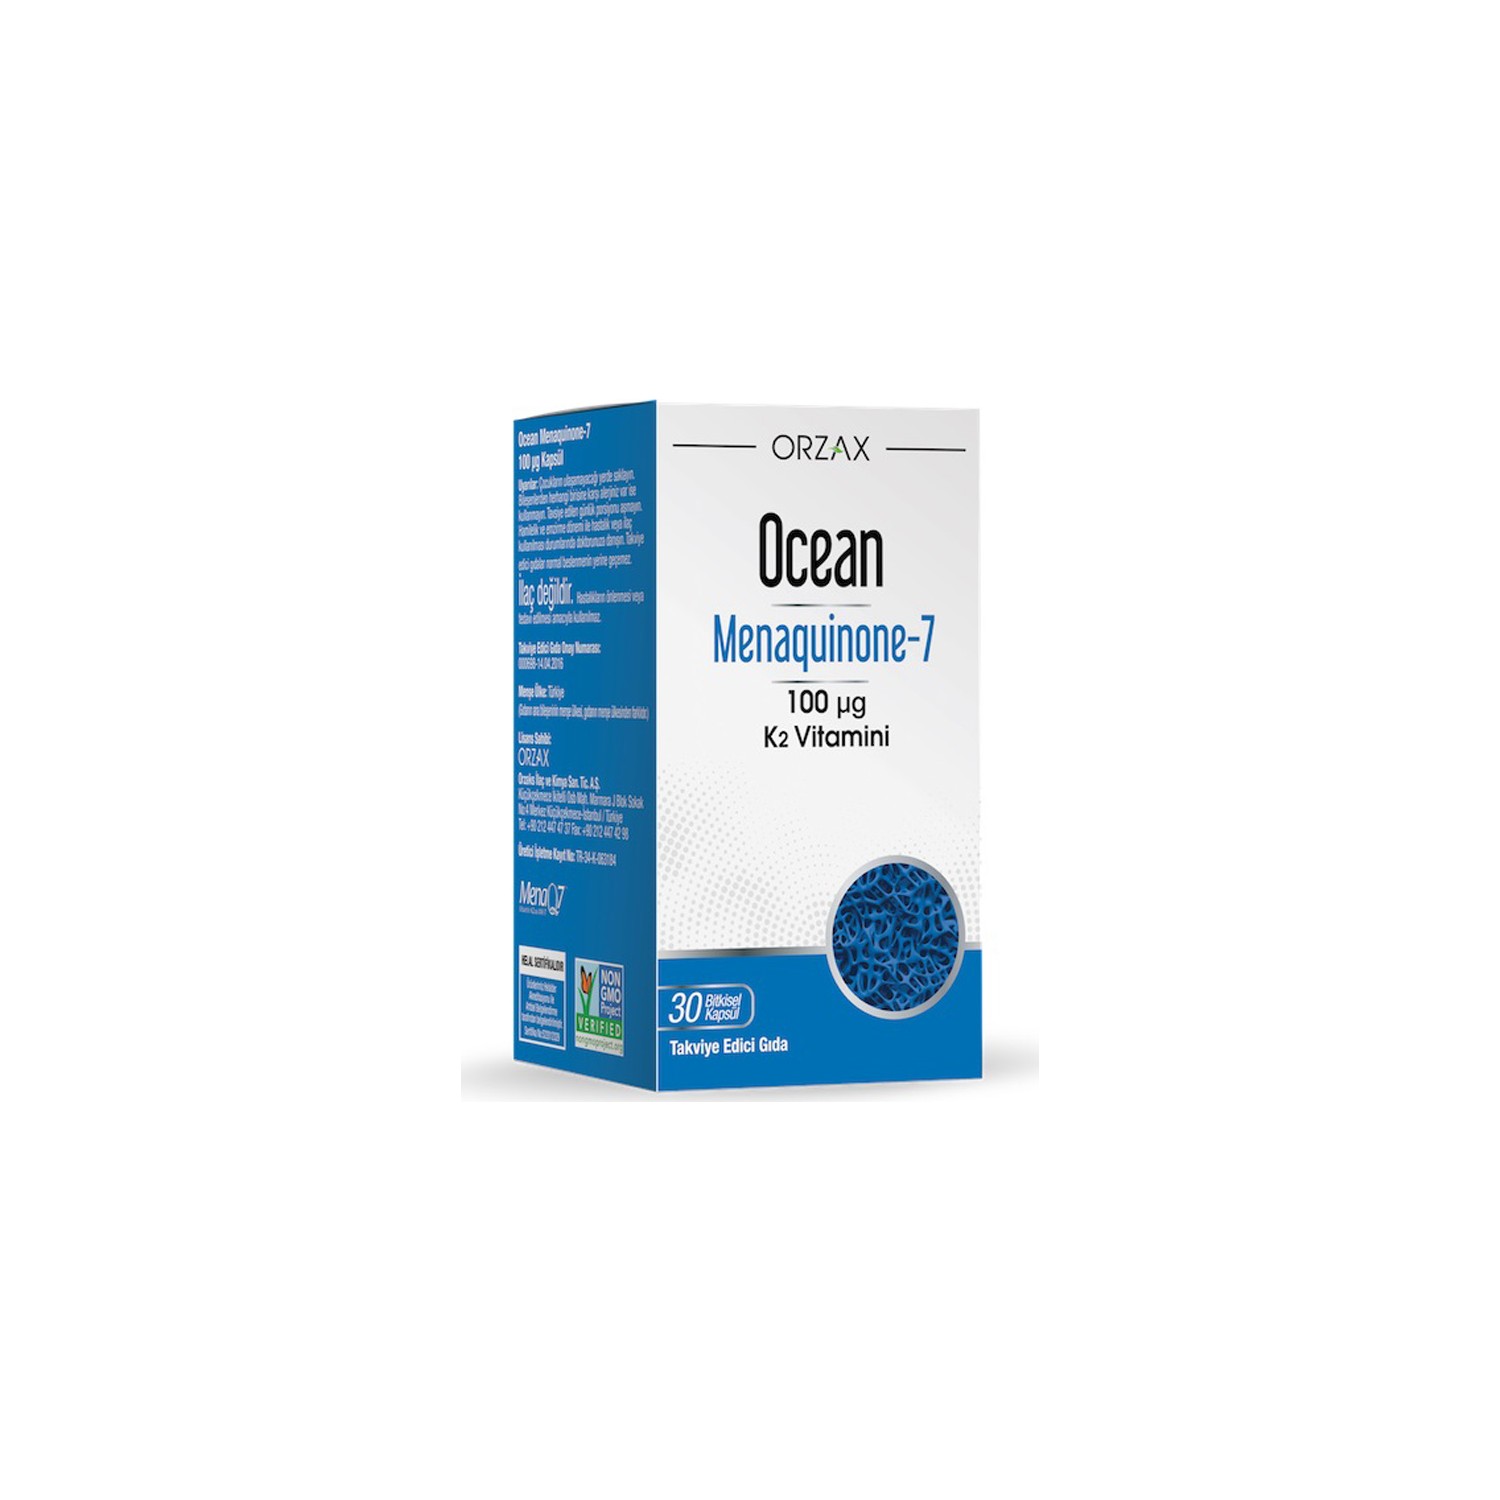 Пищевая добавка Orzax Ocean Mk-7 Vitamin К2 100 мкг, 30 капсул doctor s best витамин k2 mk 7 с menaq7 45 мкг 60 вегетарианских капсул